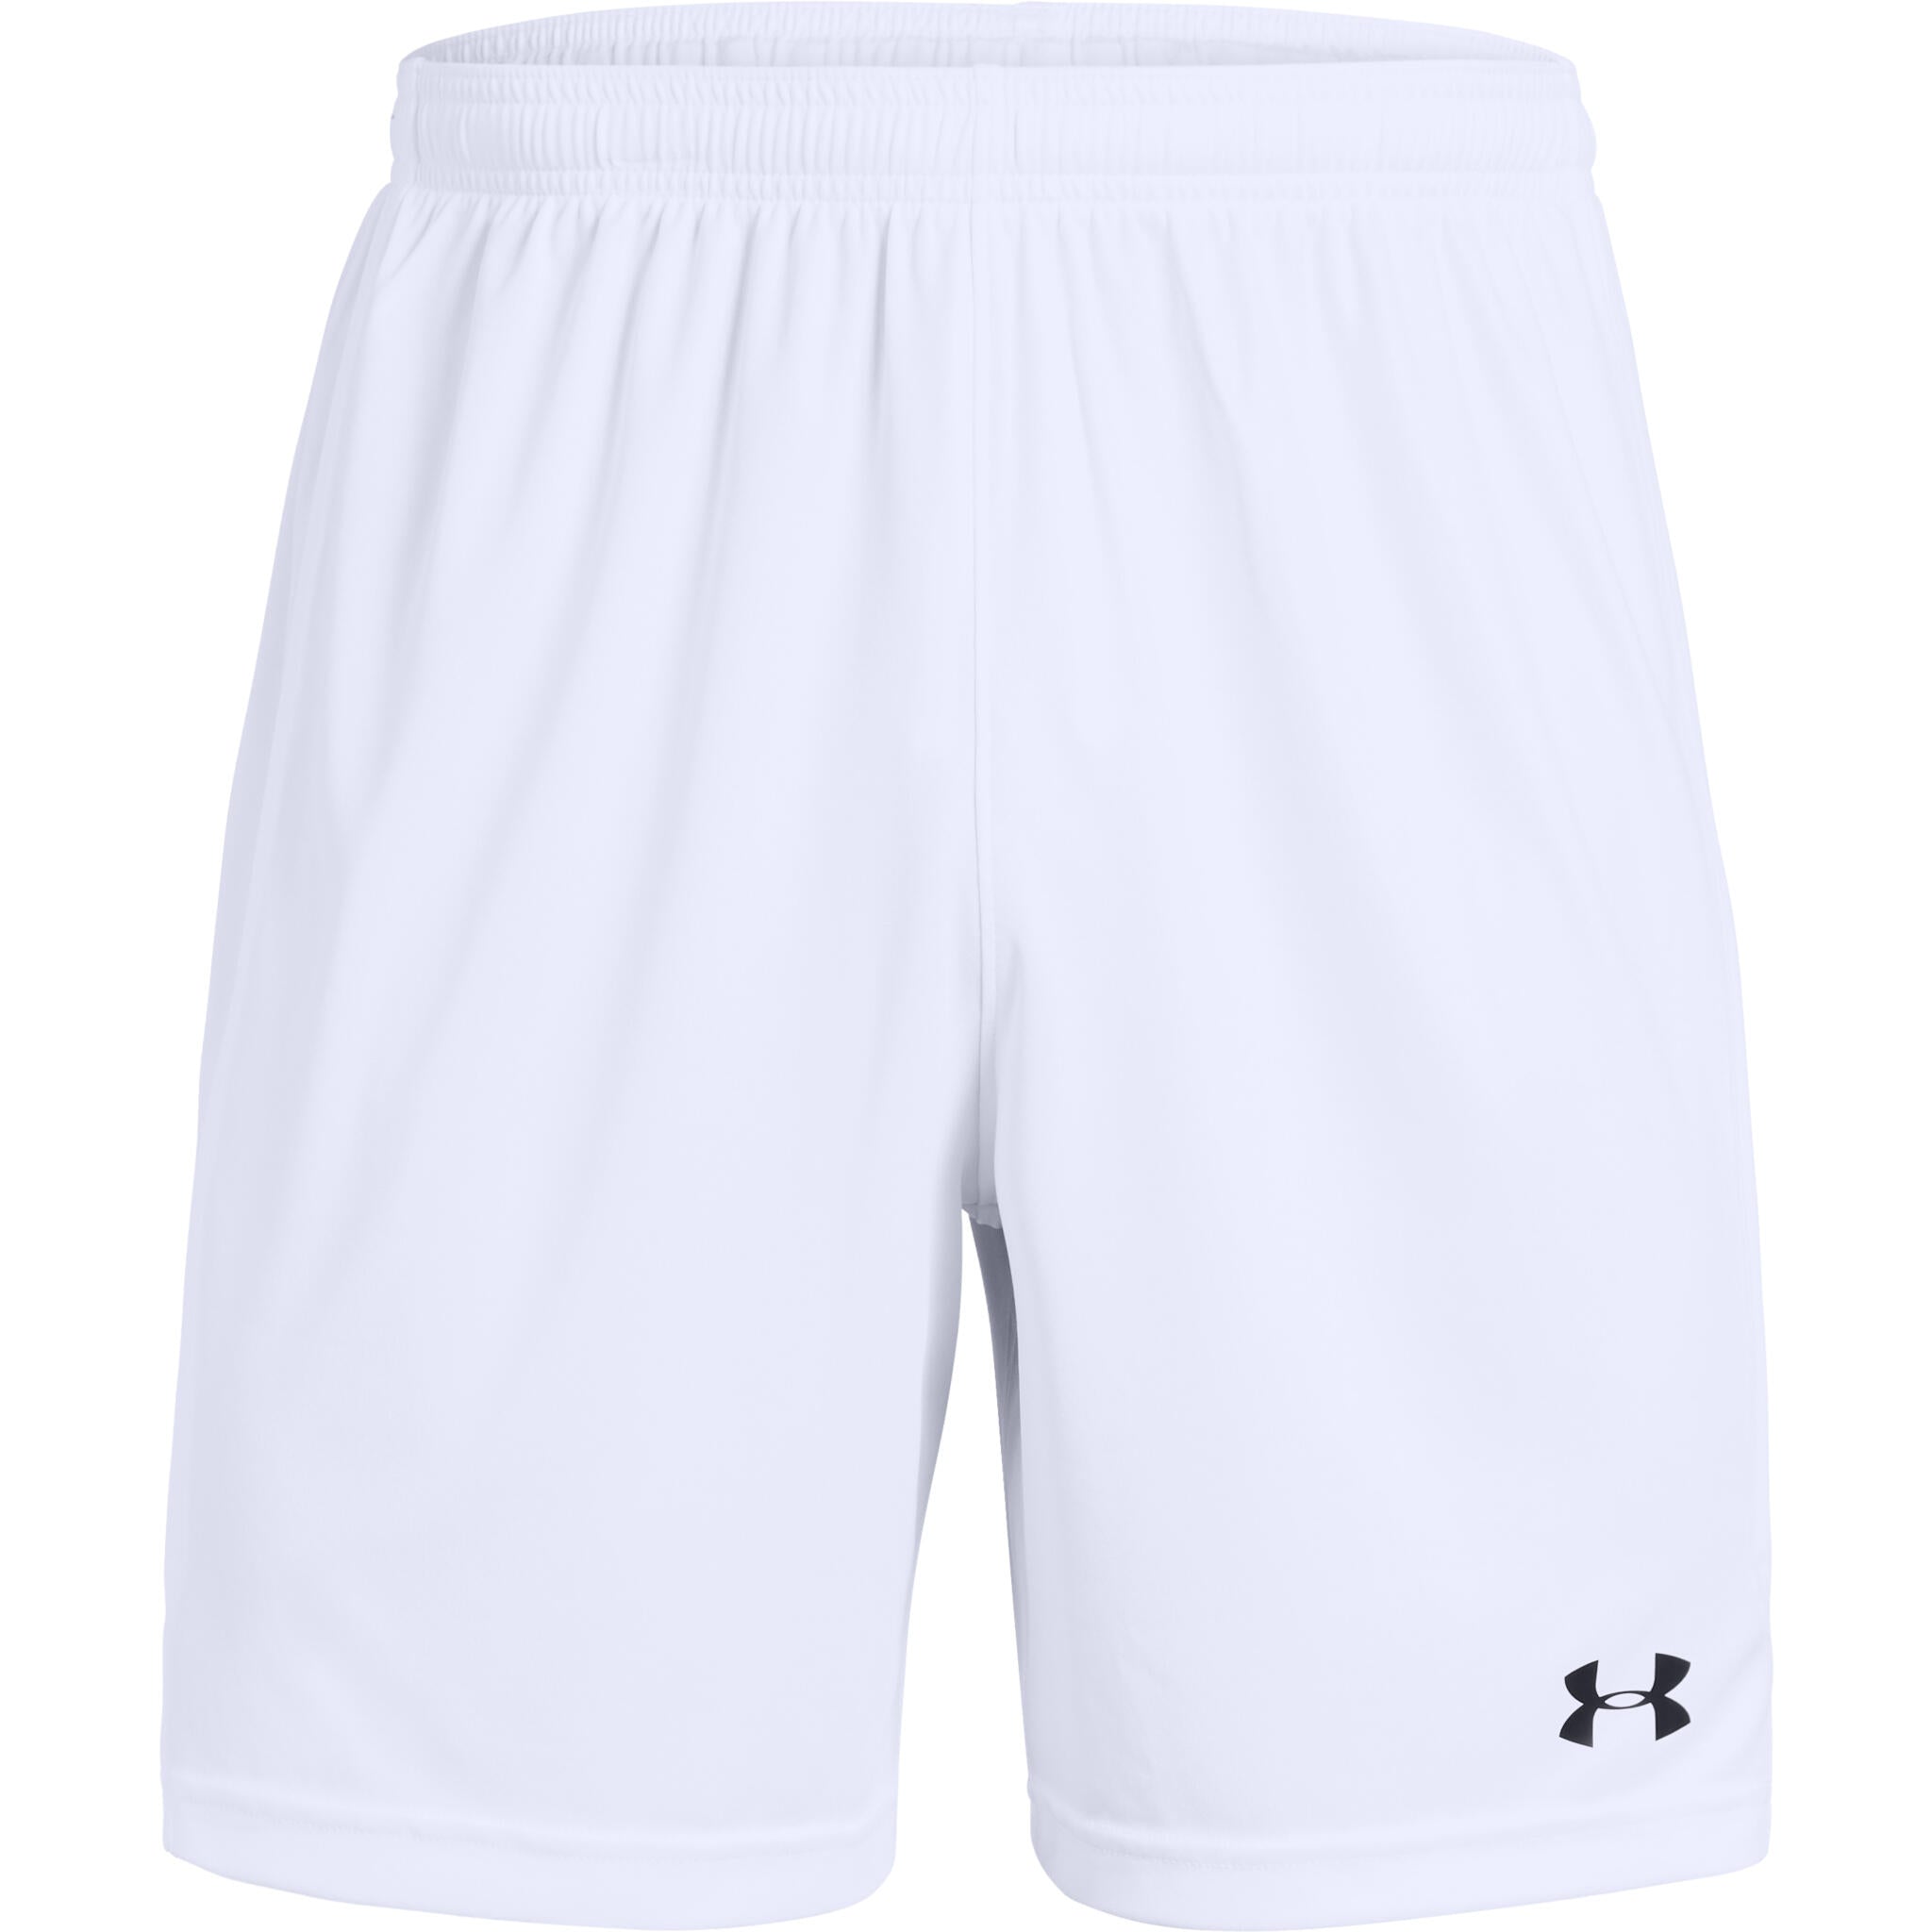 Under Armour Shorts Men 2XL White Swoosh Logo Loose Fit Athletic